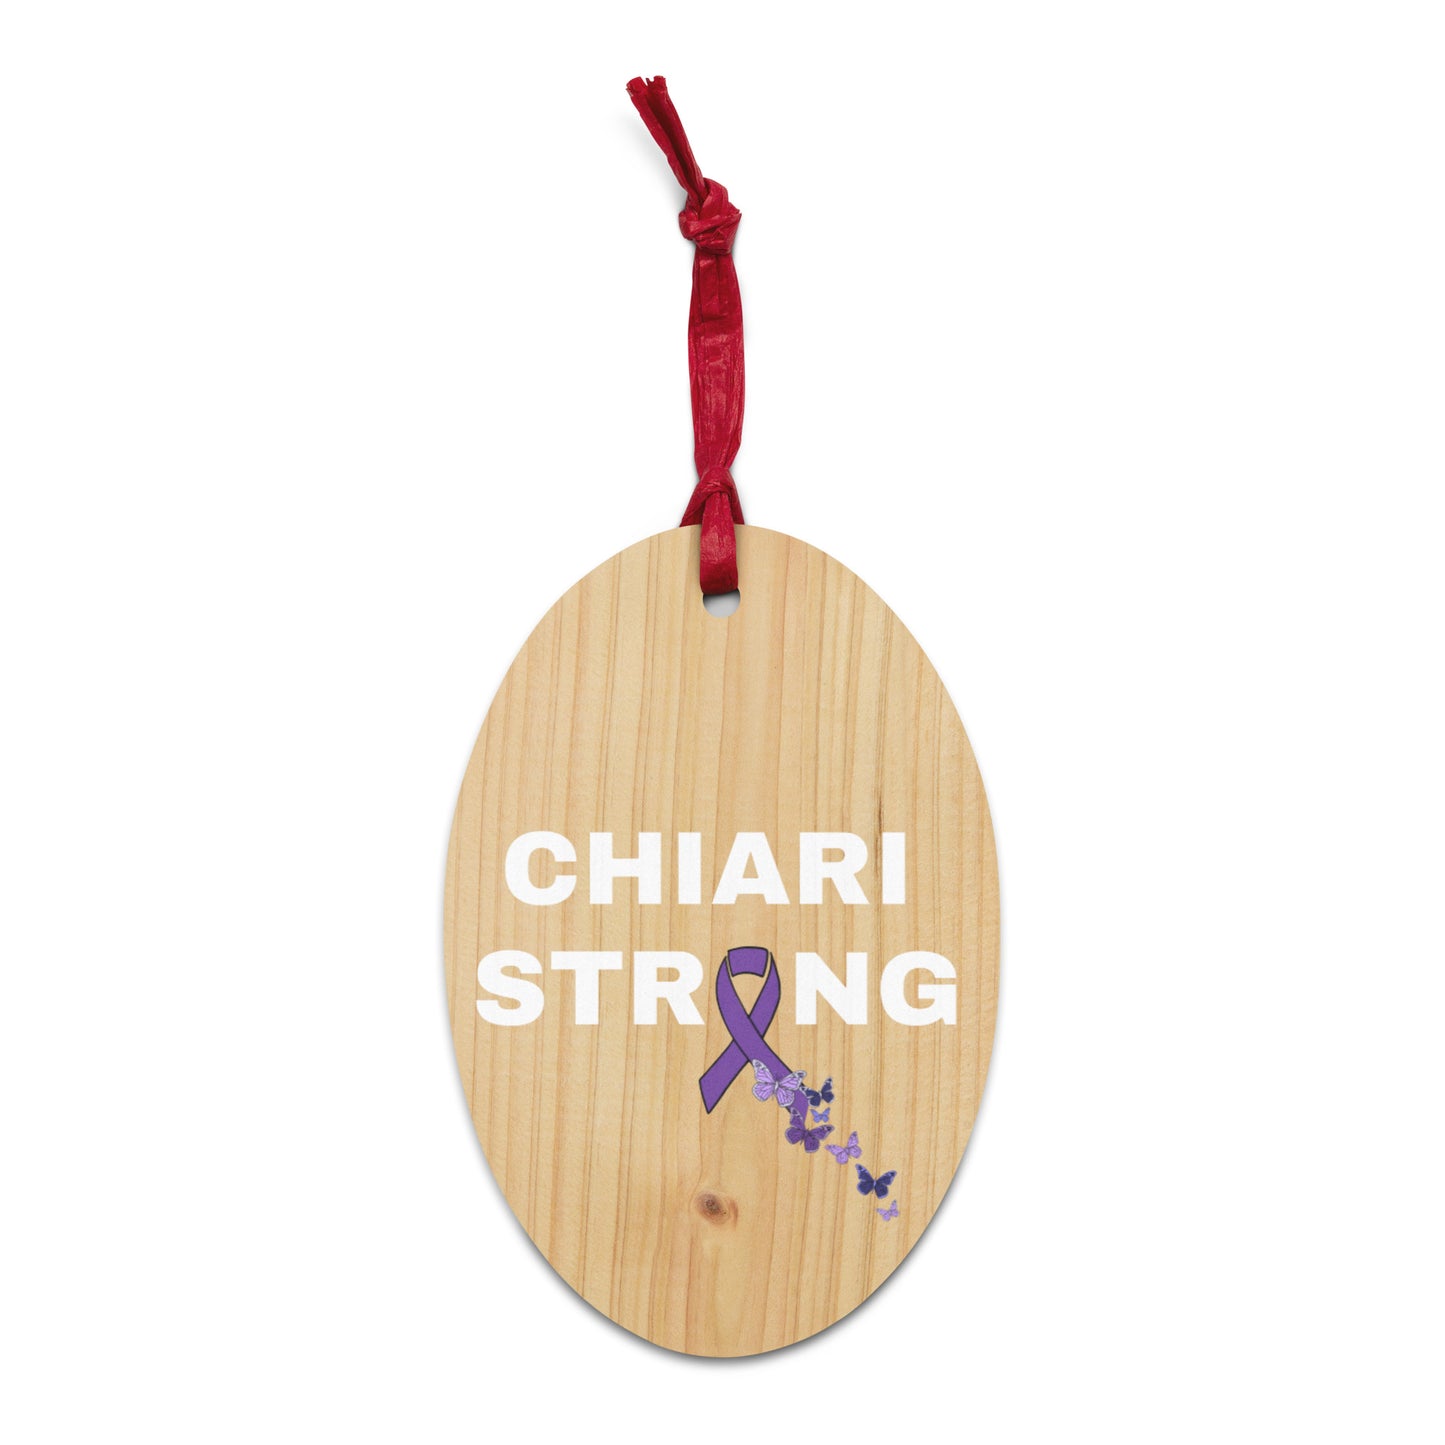 Chiari Strong Wooden ornaments